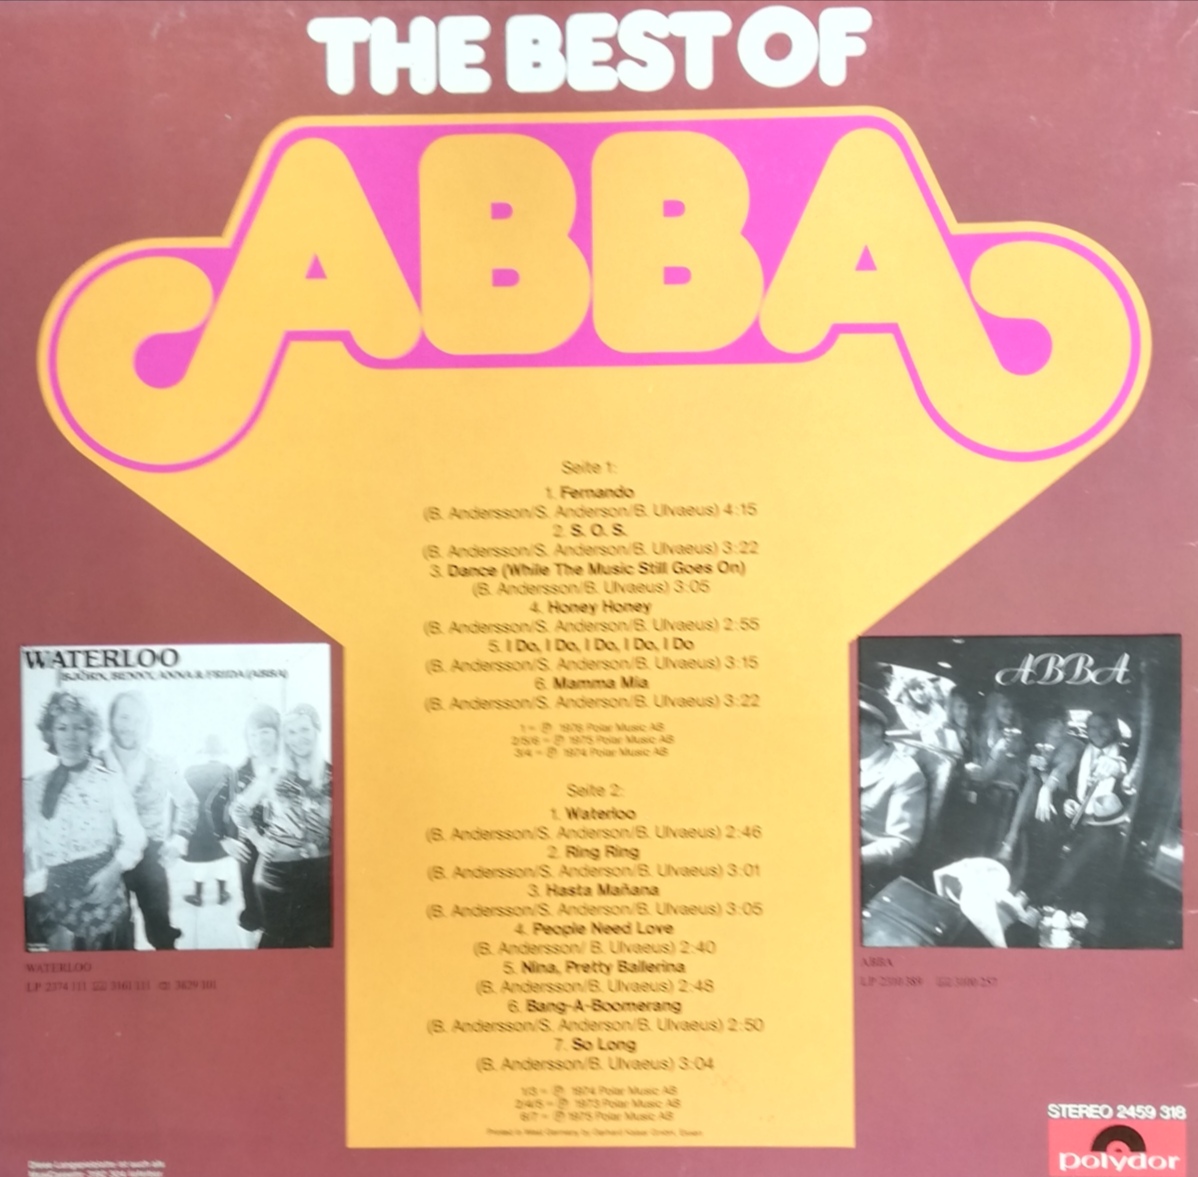 Okładka płyty winylowej artysty Abba o tytule THE BEST OF ABBA